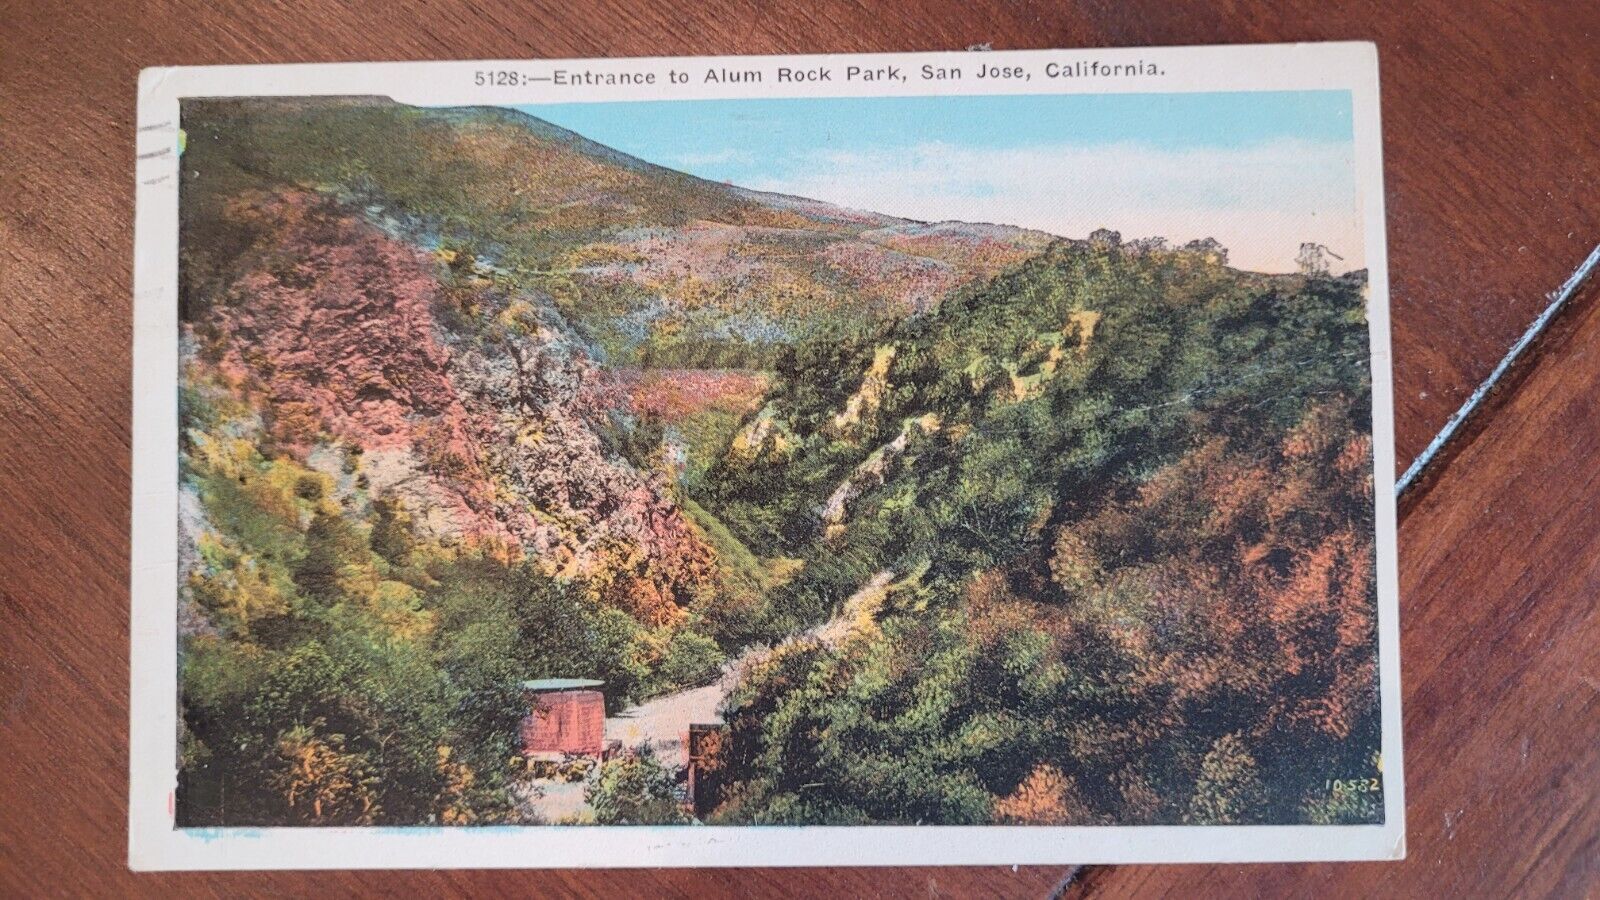 Alum Rock Park San Jose California Vintage Post Card small crease